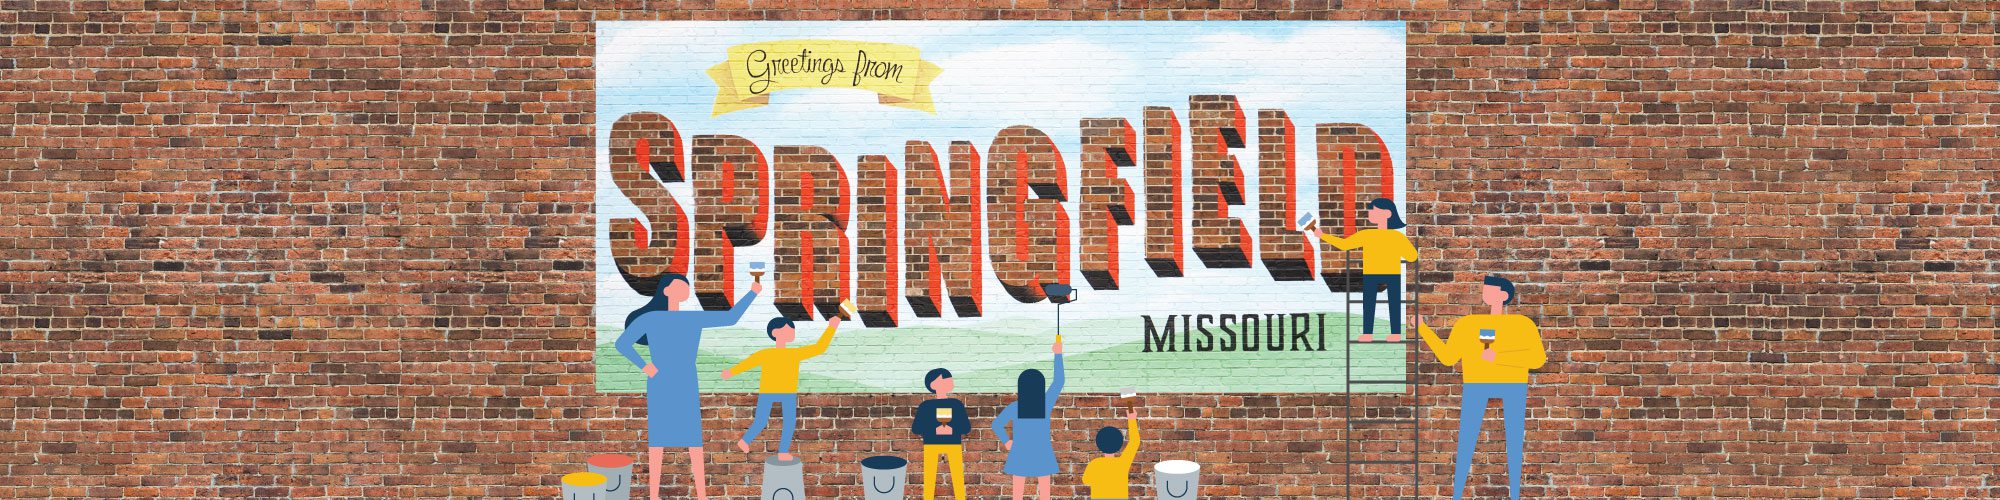 Greetings from Springfield Missouri mural